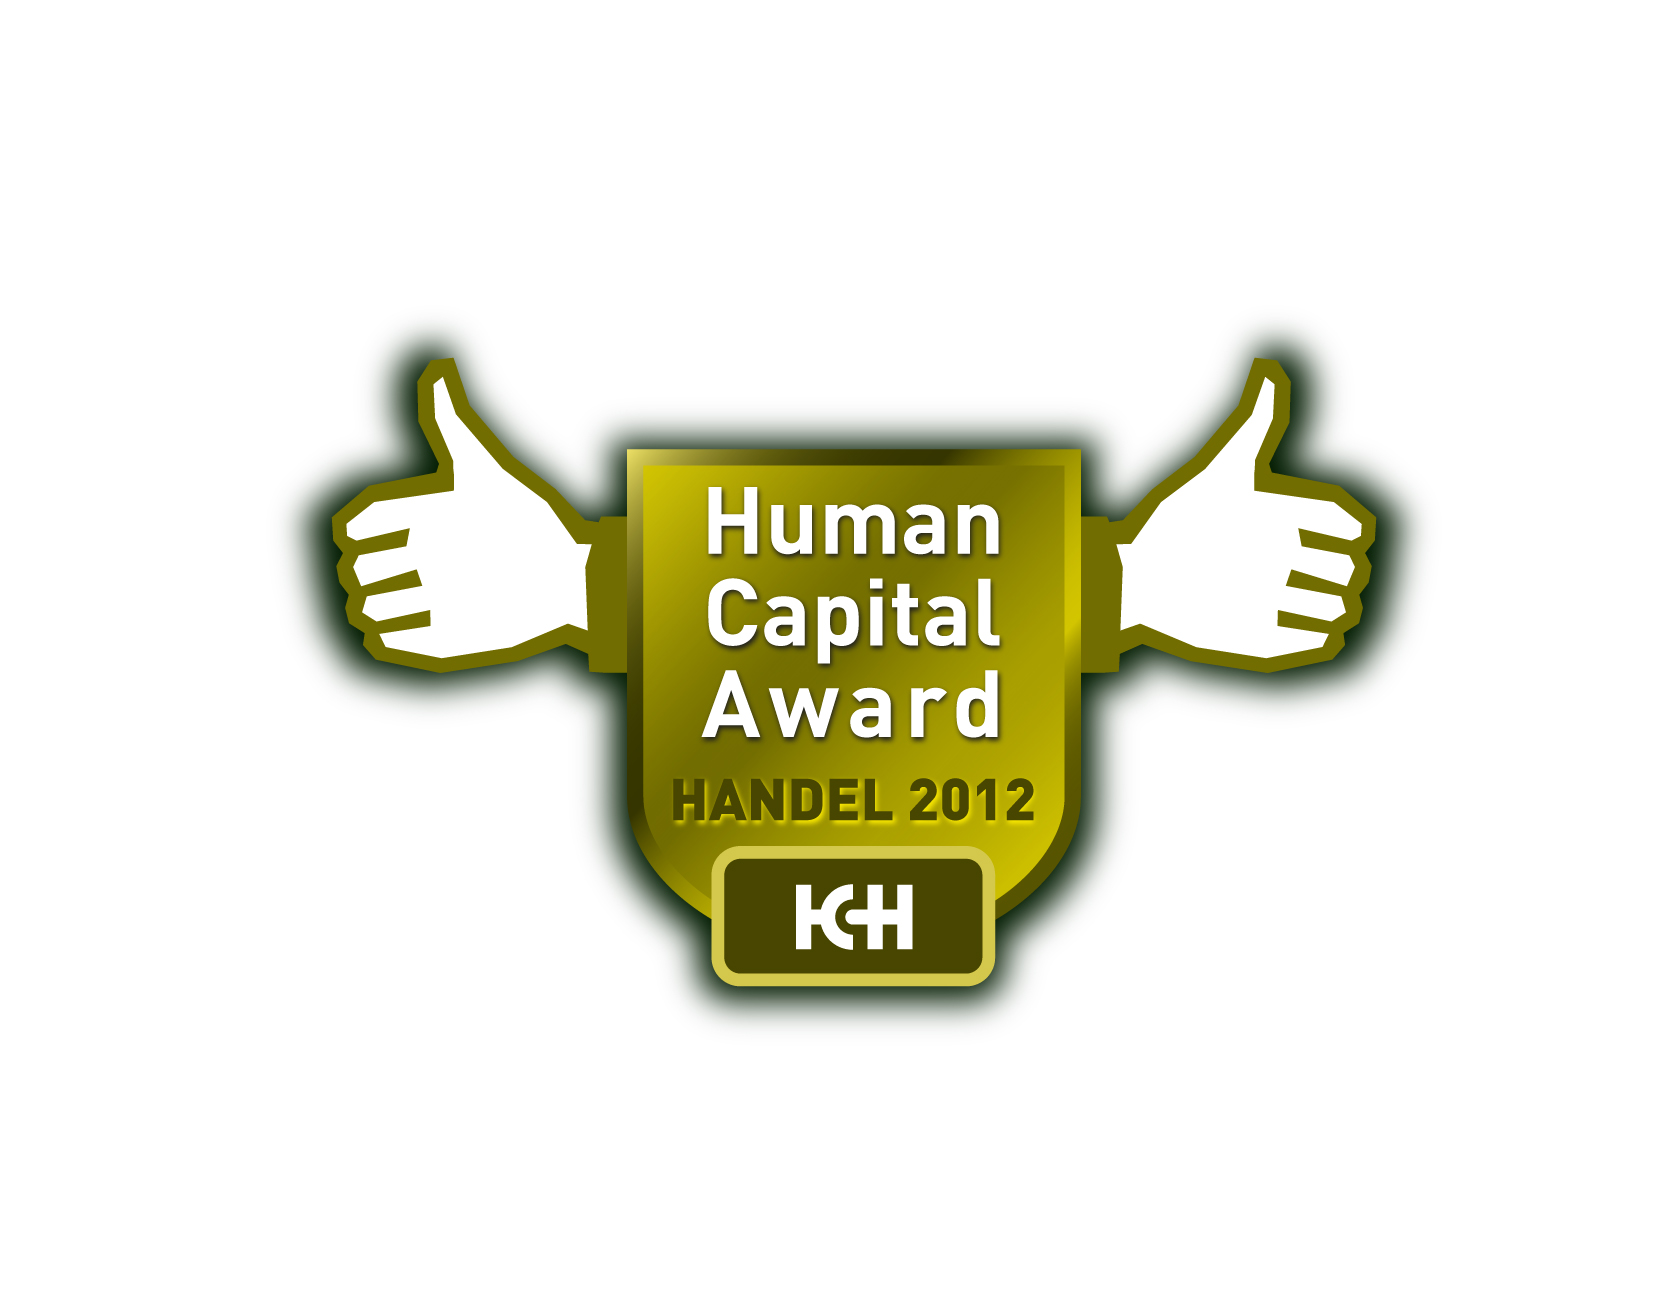 Winnaar Human Capital Award handel 2012 bekend